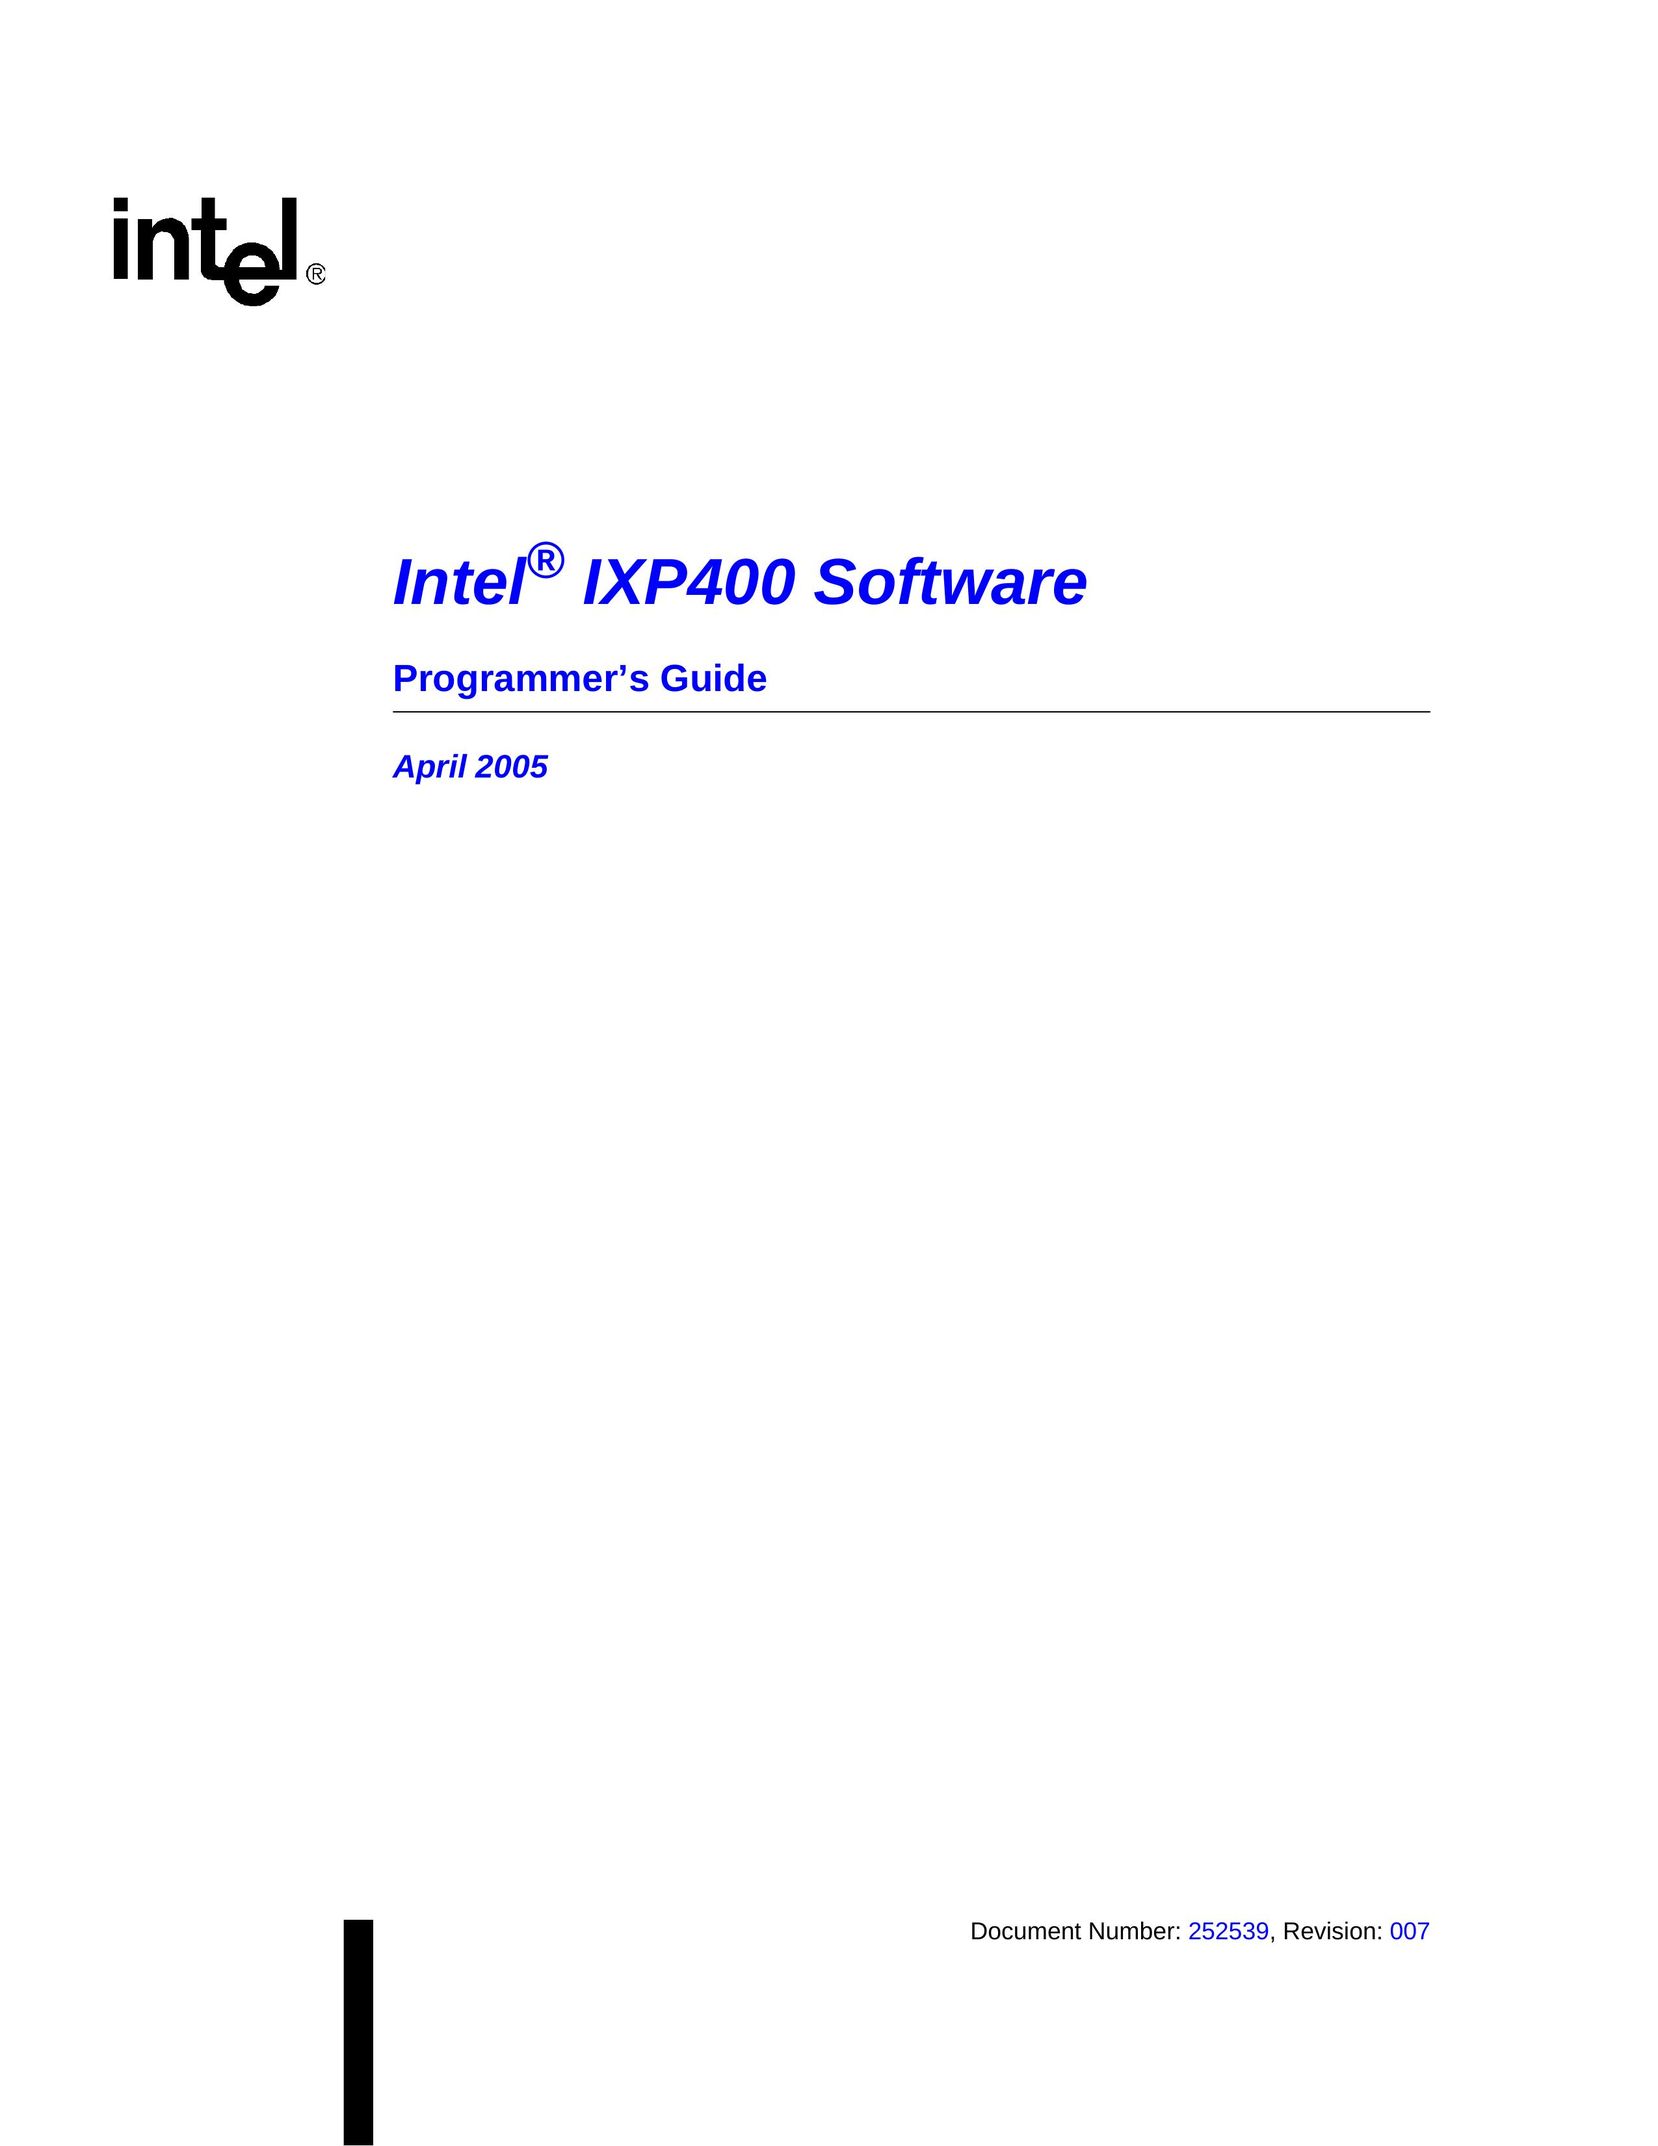 Intel IXP400 Frozen Dessert Maker User Manual